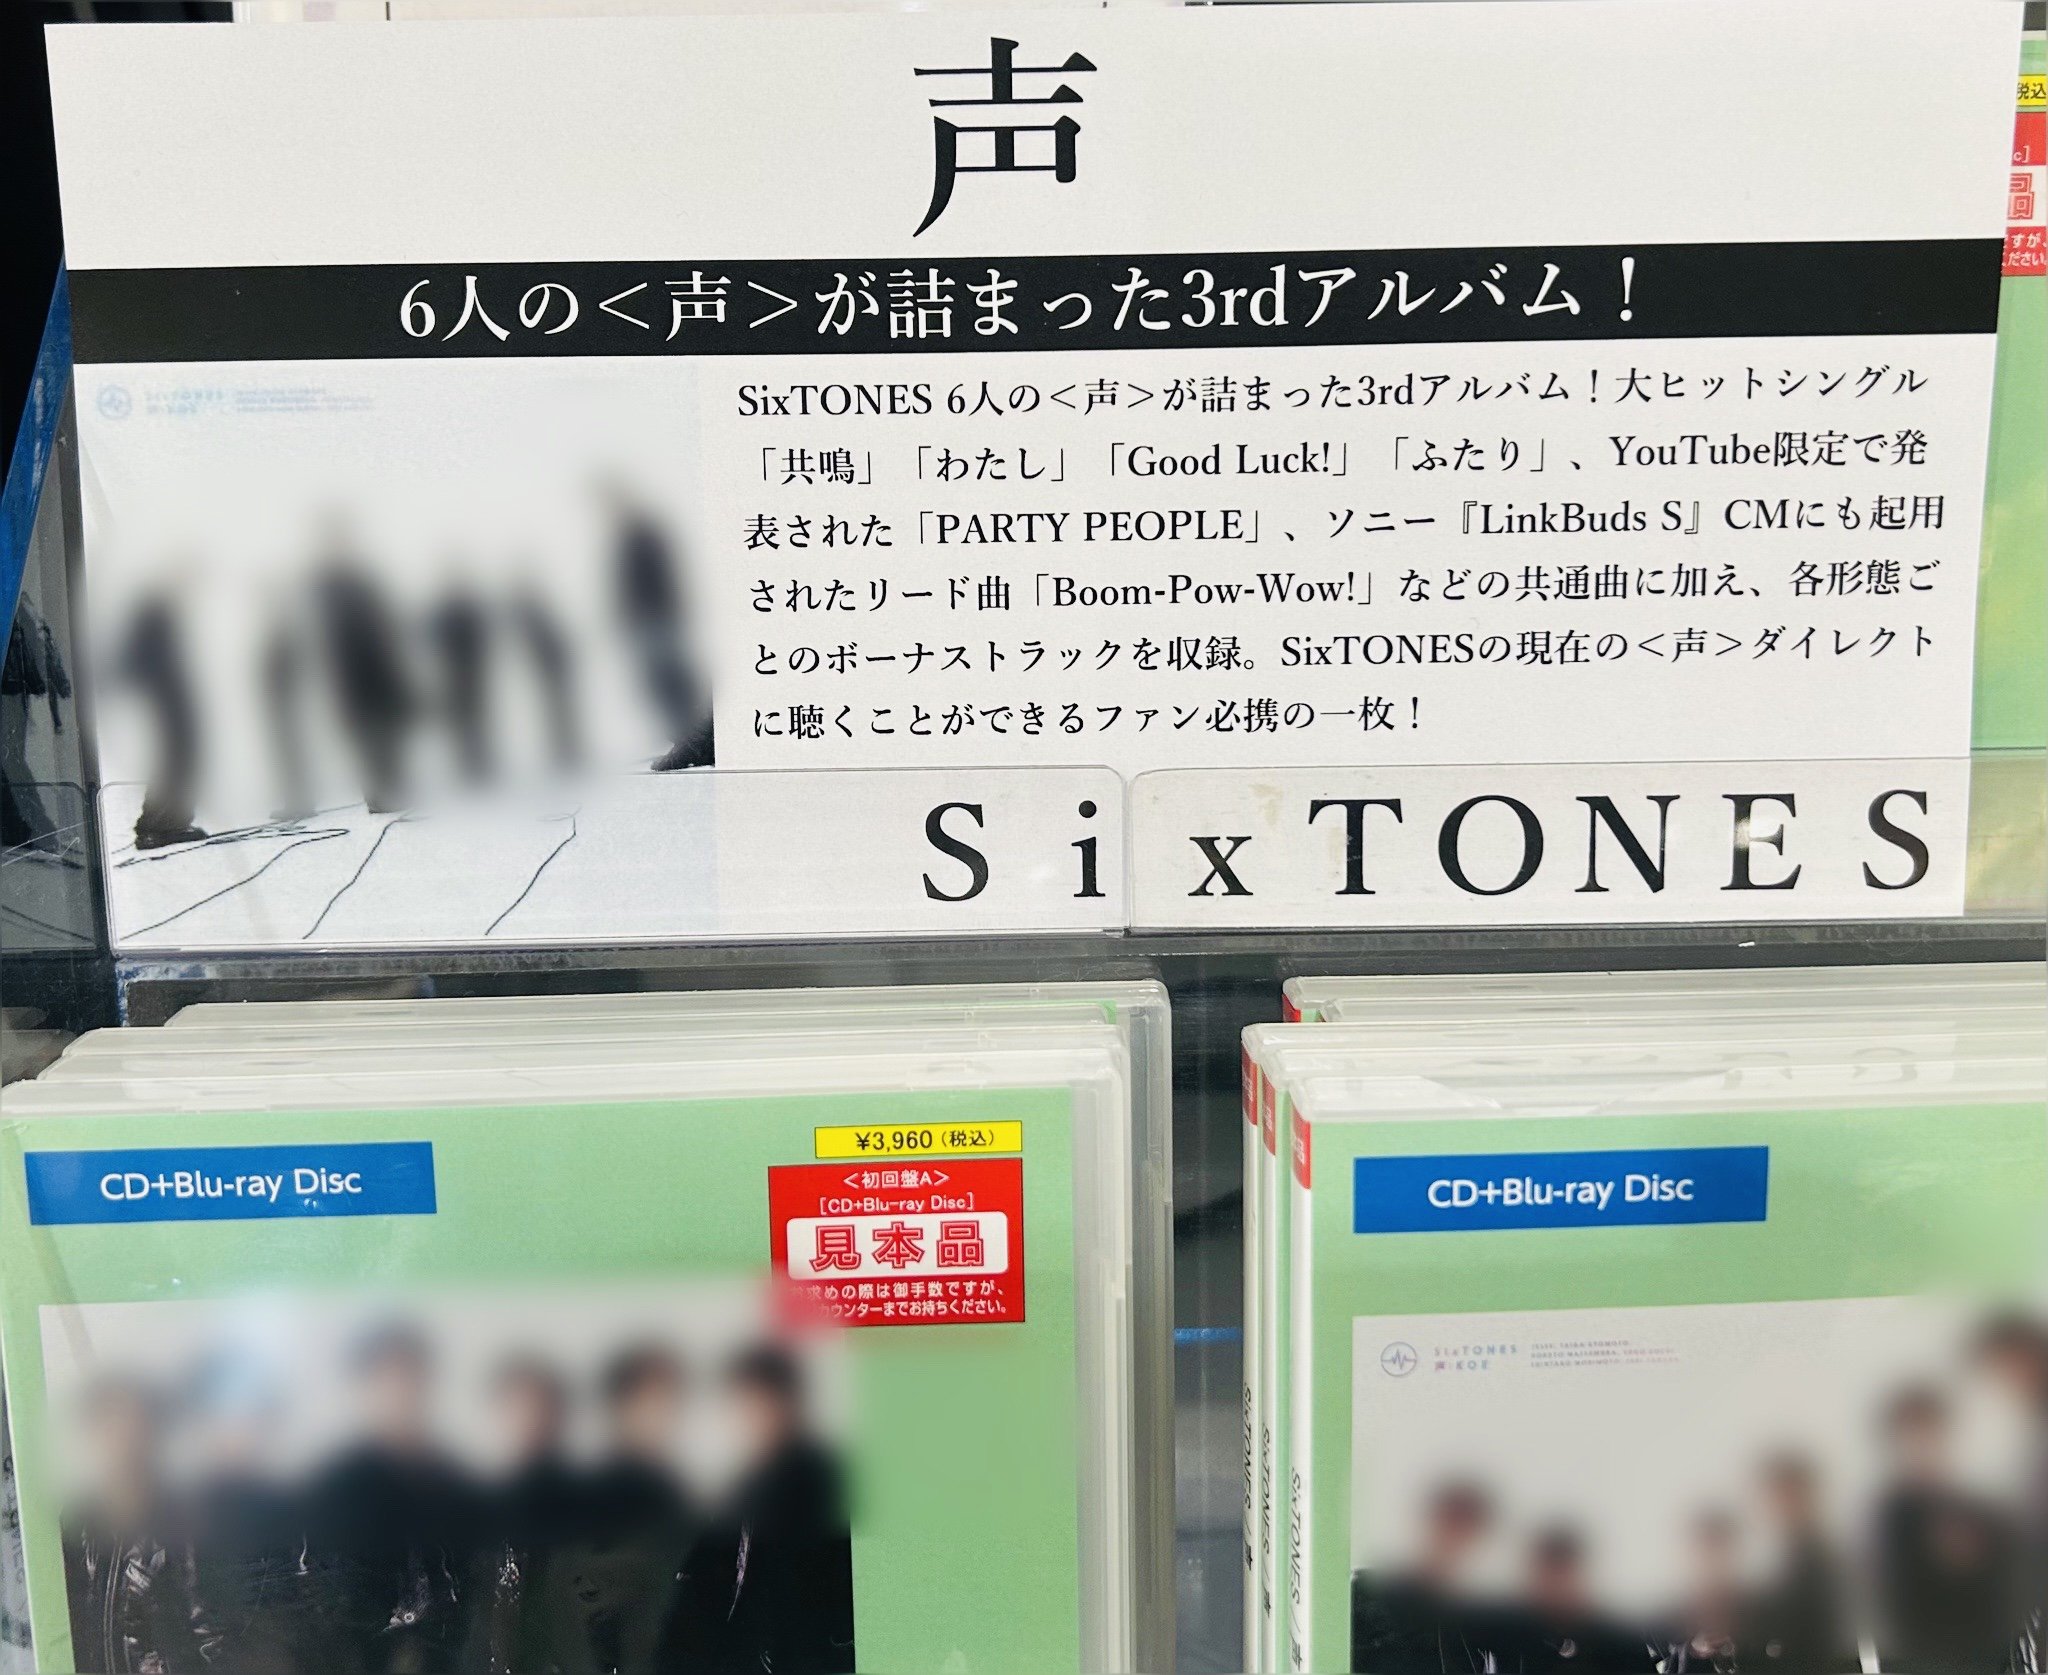 SixTONES CD single シングル セット 全形態 特典付き 正式 www